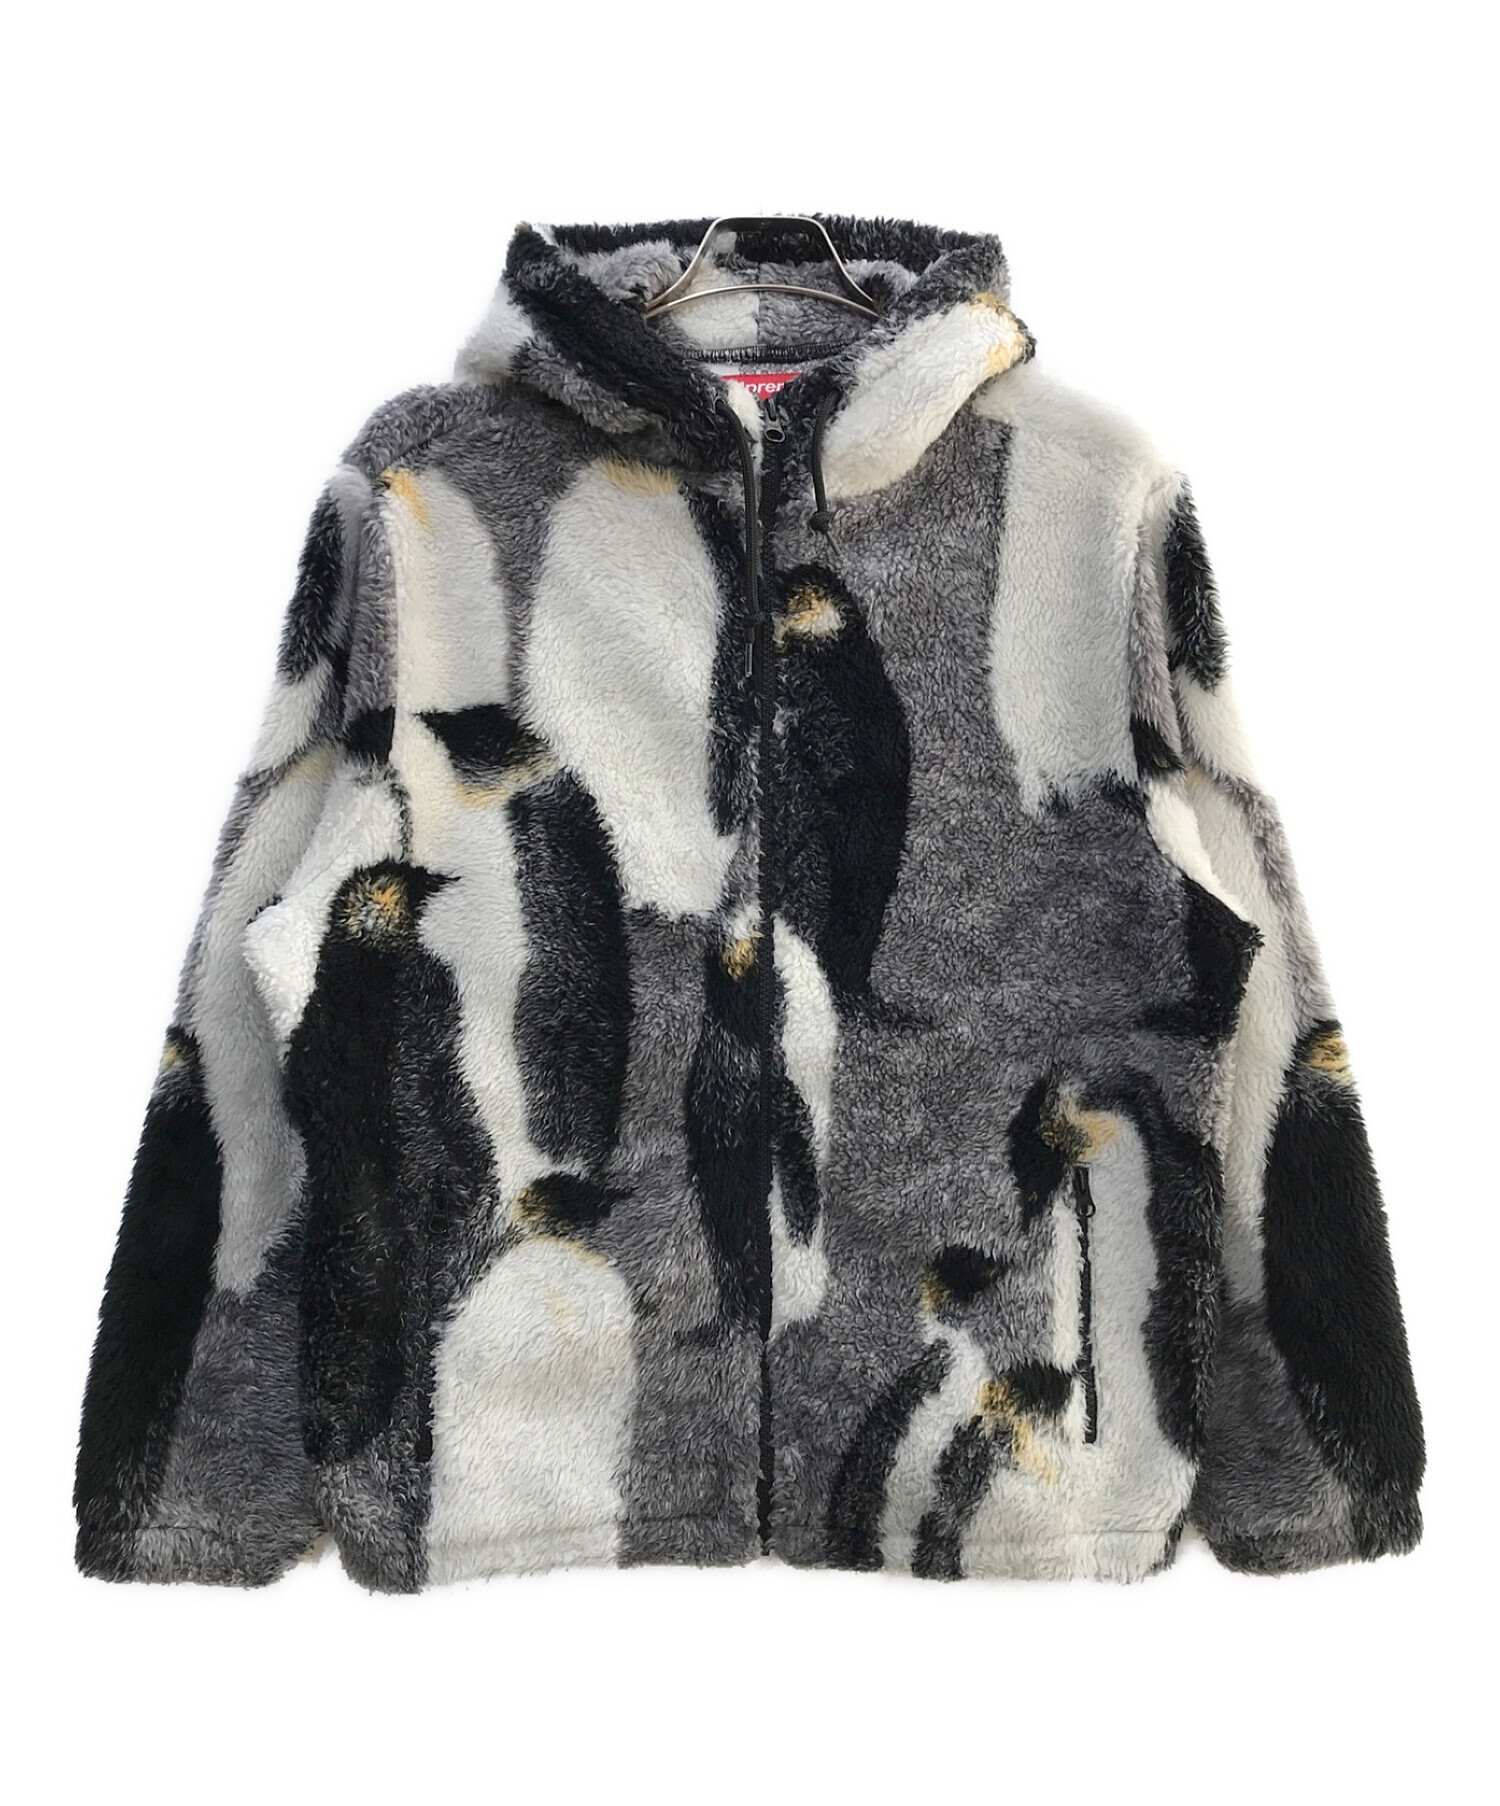 Penguins Hooded Fleece Jacket 黒 M